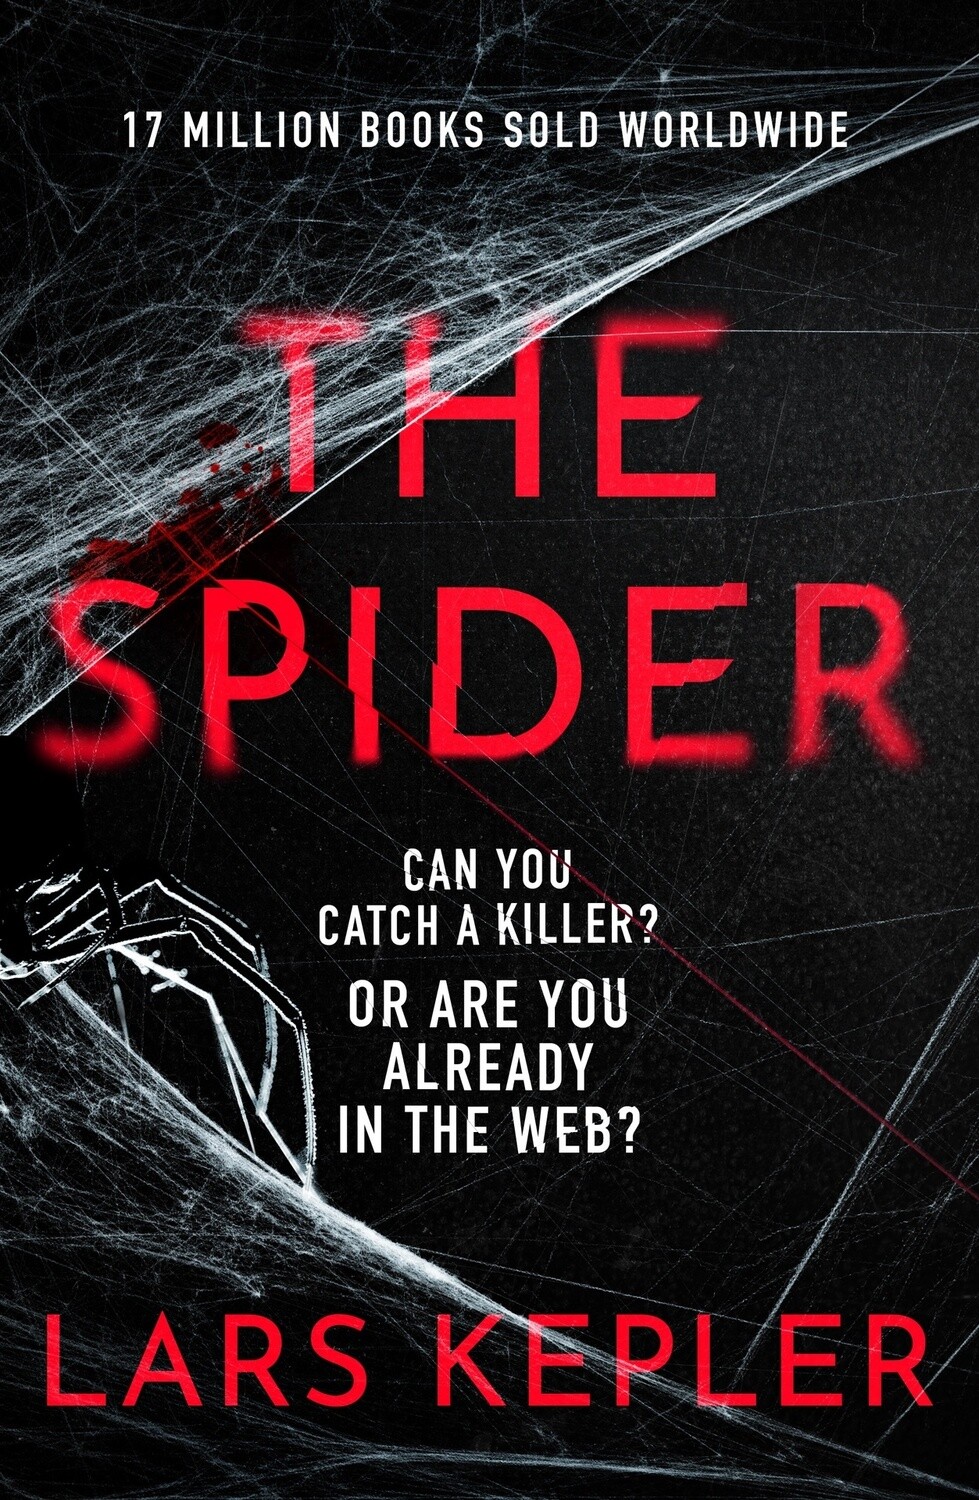 The Spider by Lars Kepler